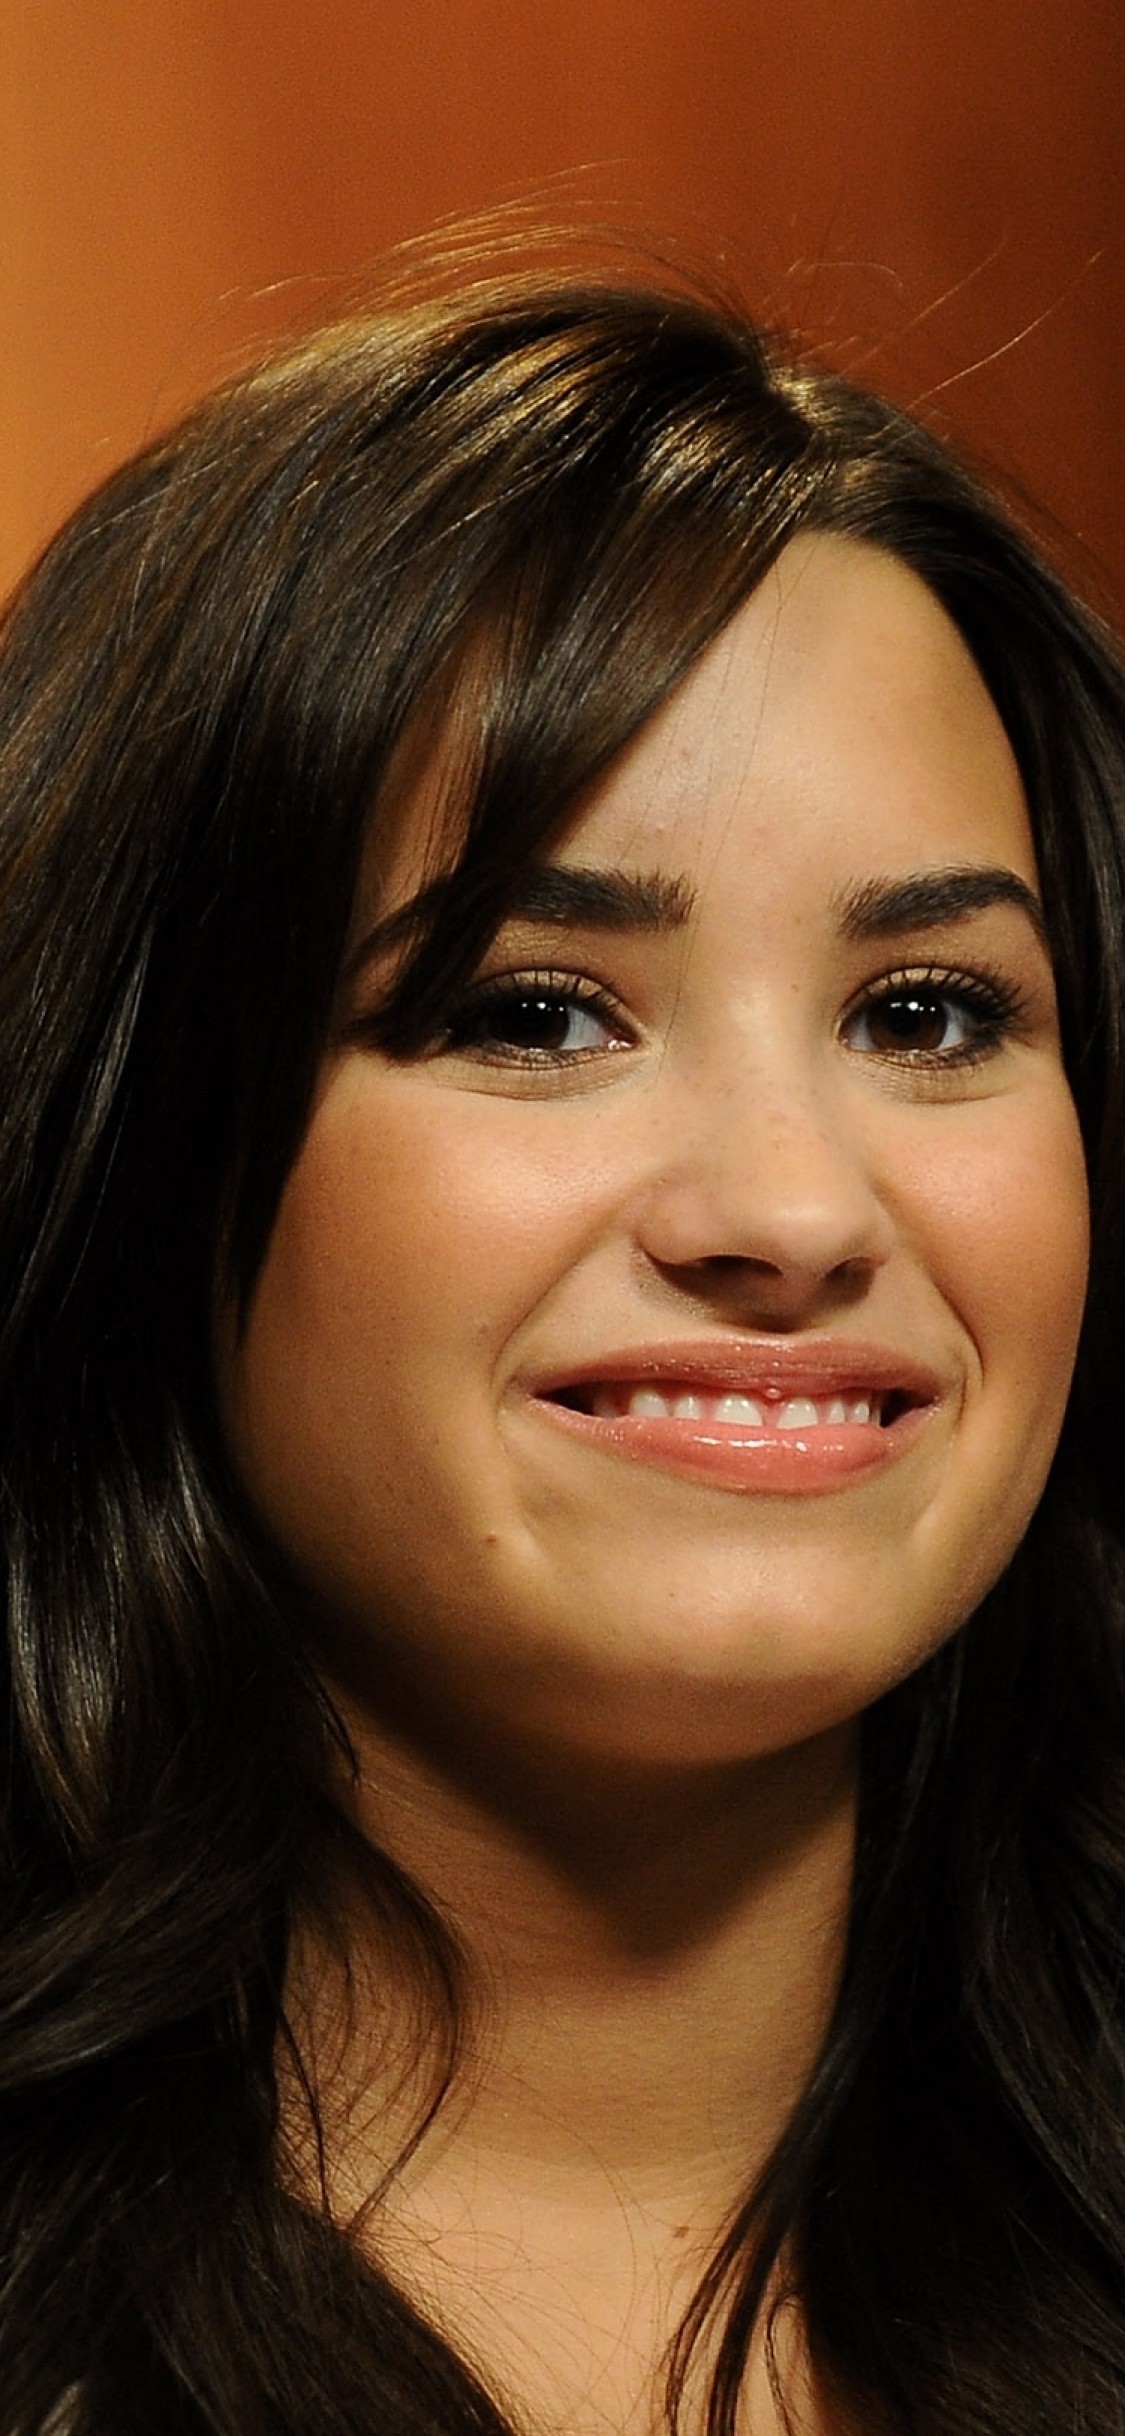 Demi Lovato, Smiling, Singer - Demi Lovato Loose Bangs - HD Wallpaper 